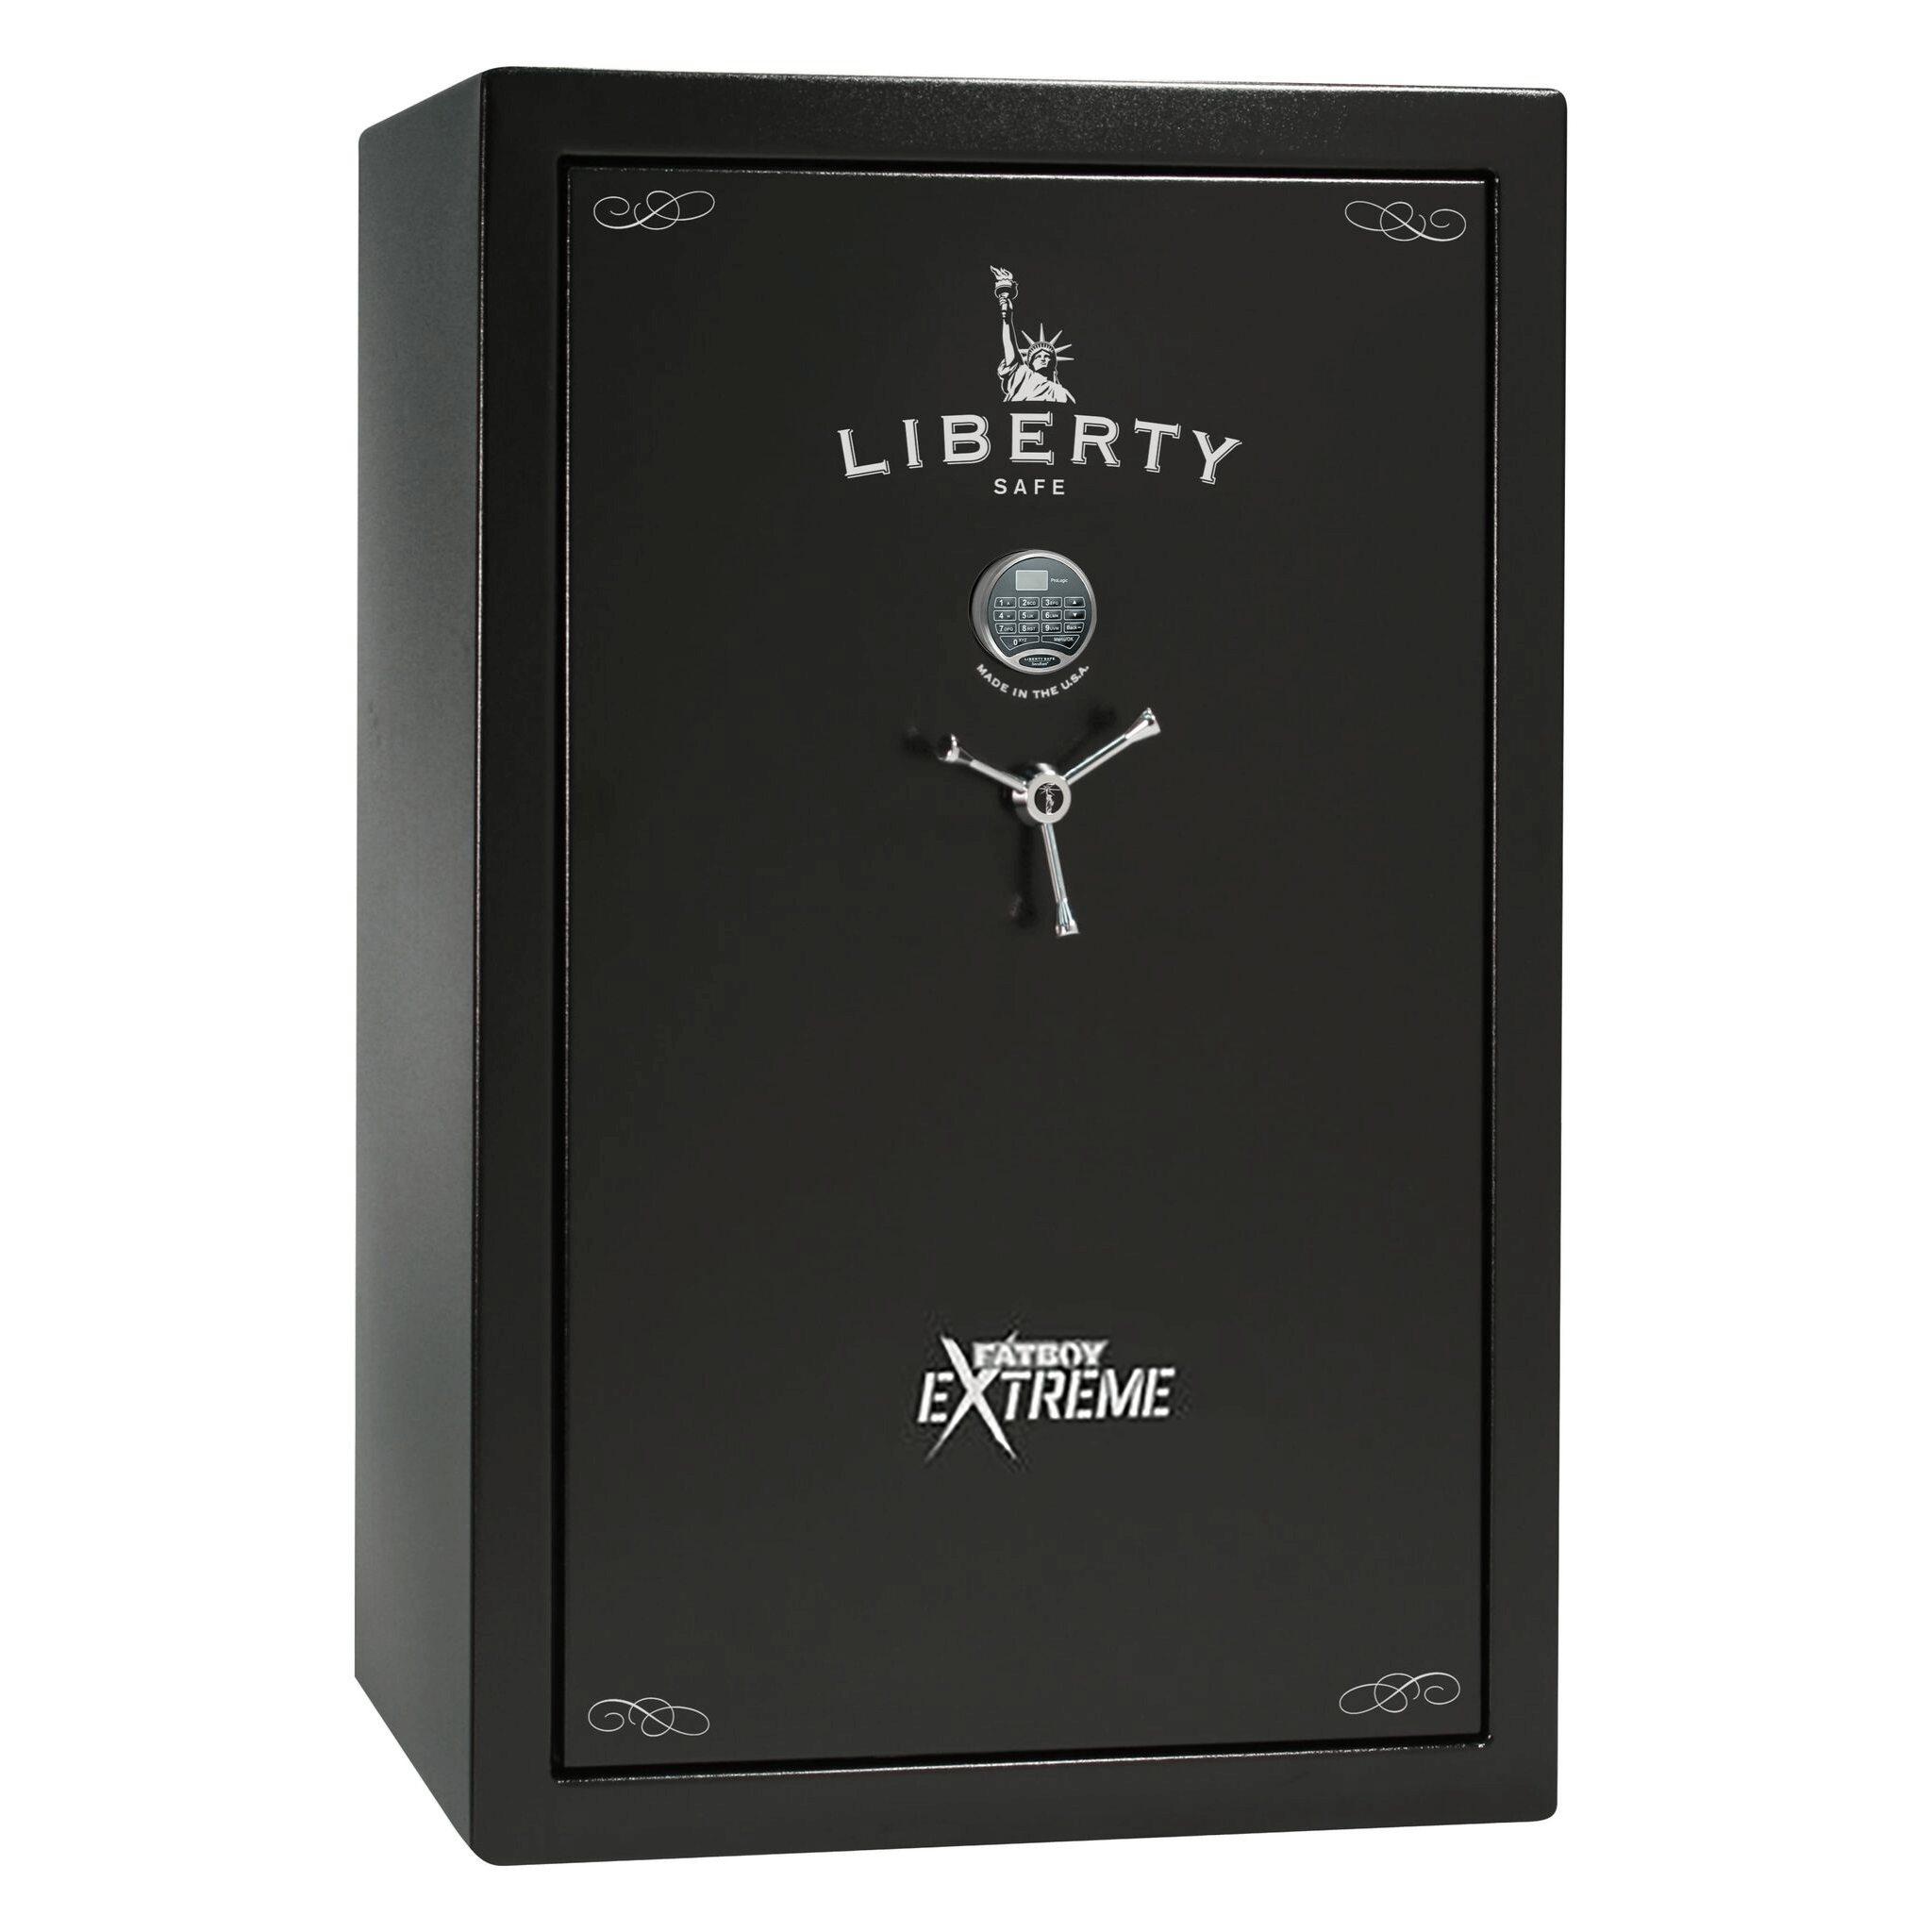 Liberty Fatboy 64 Extreme Gun Safe with Electronic Lock, image 1 